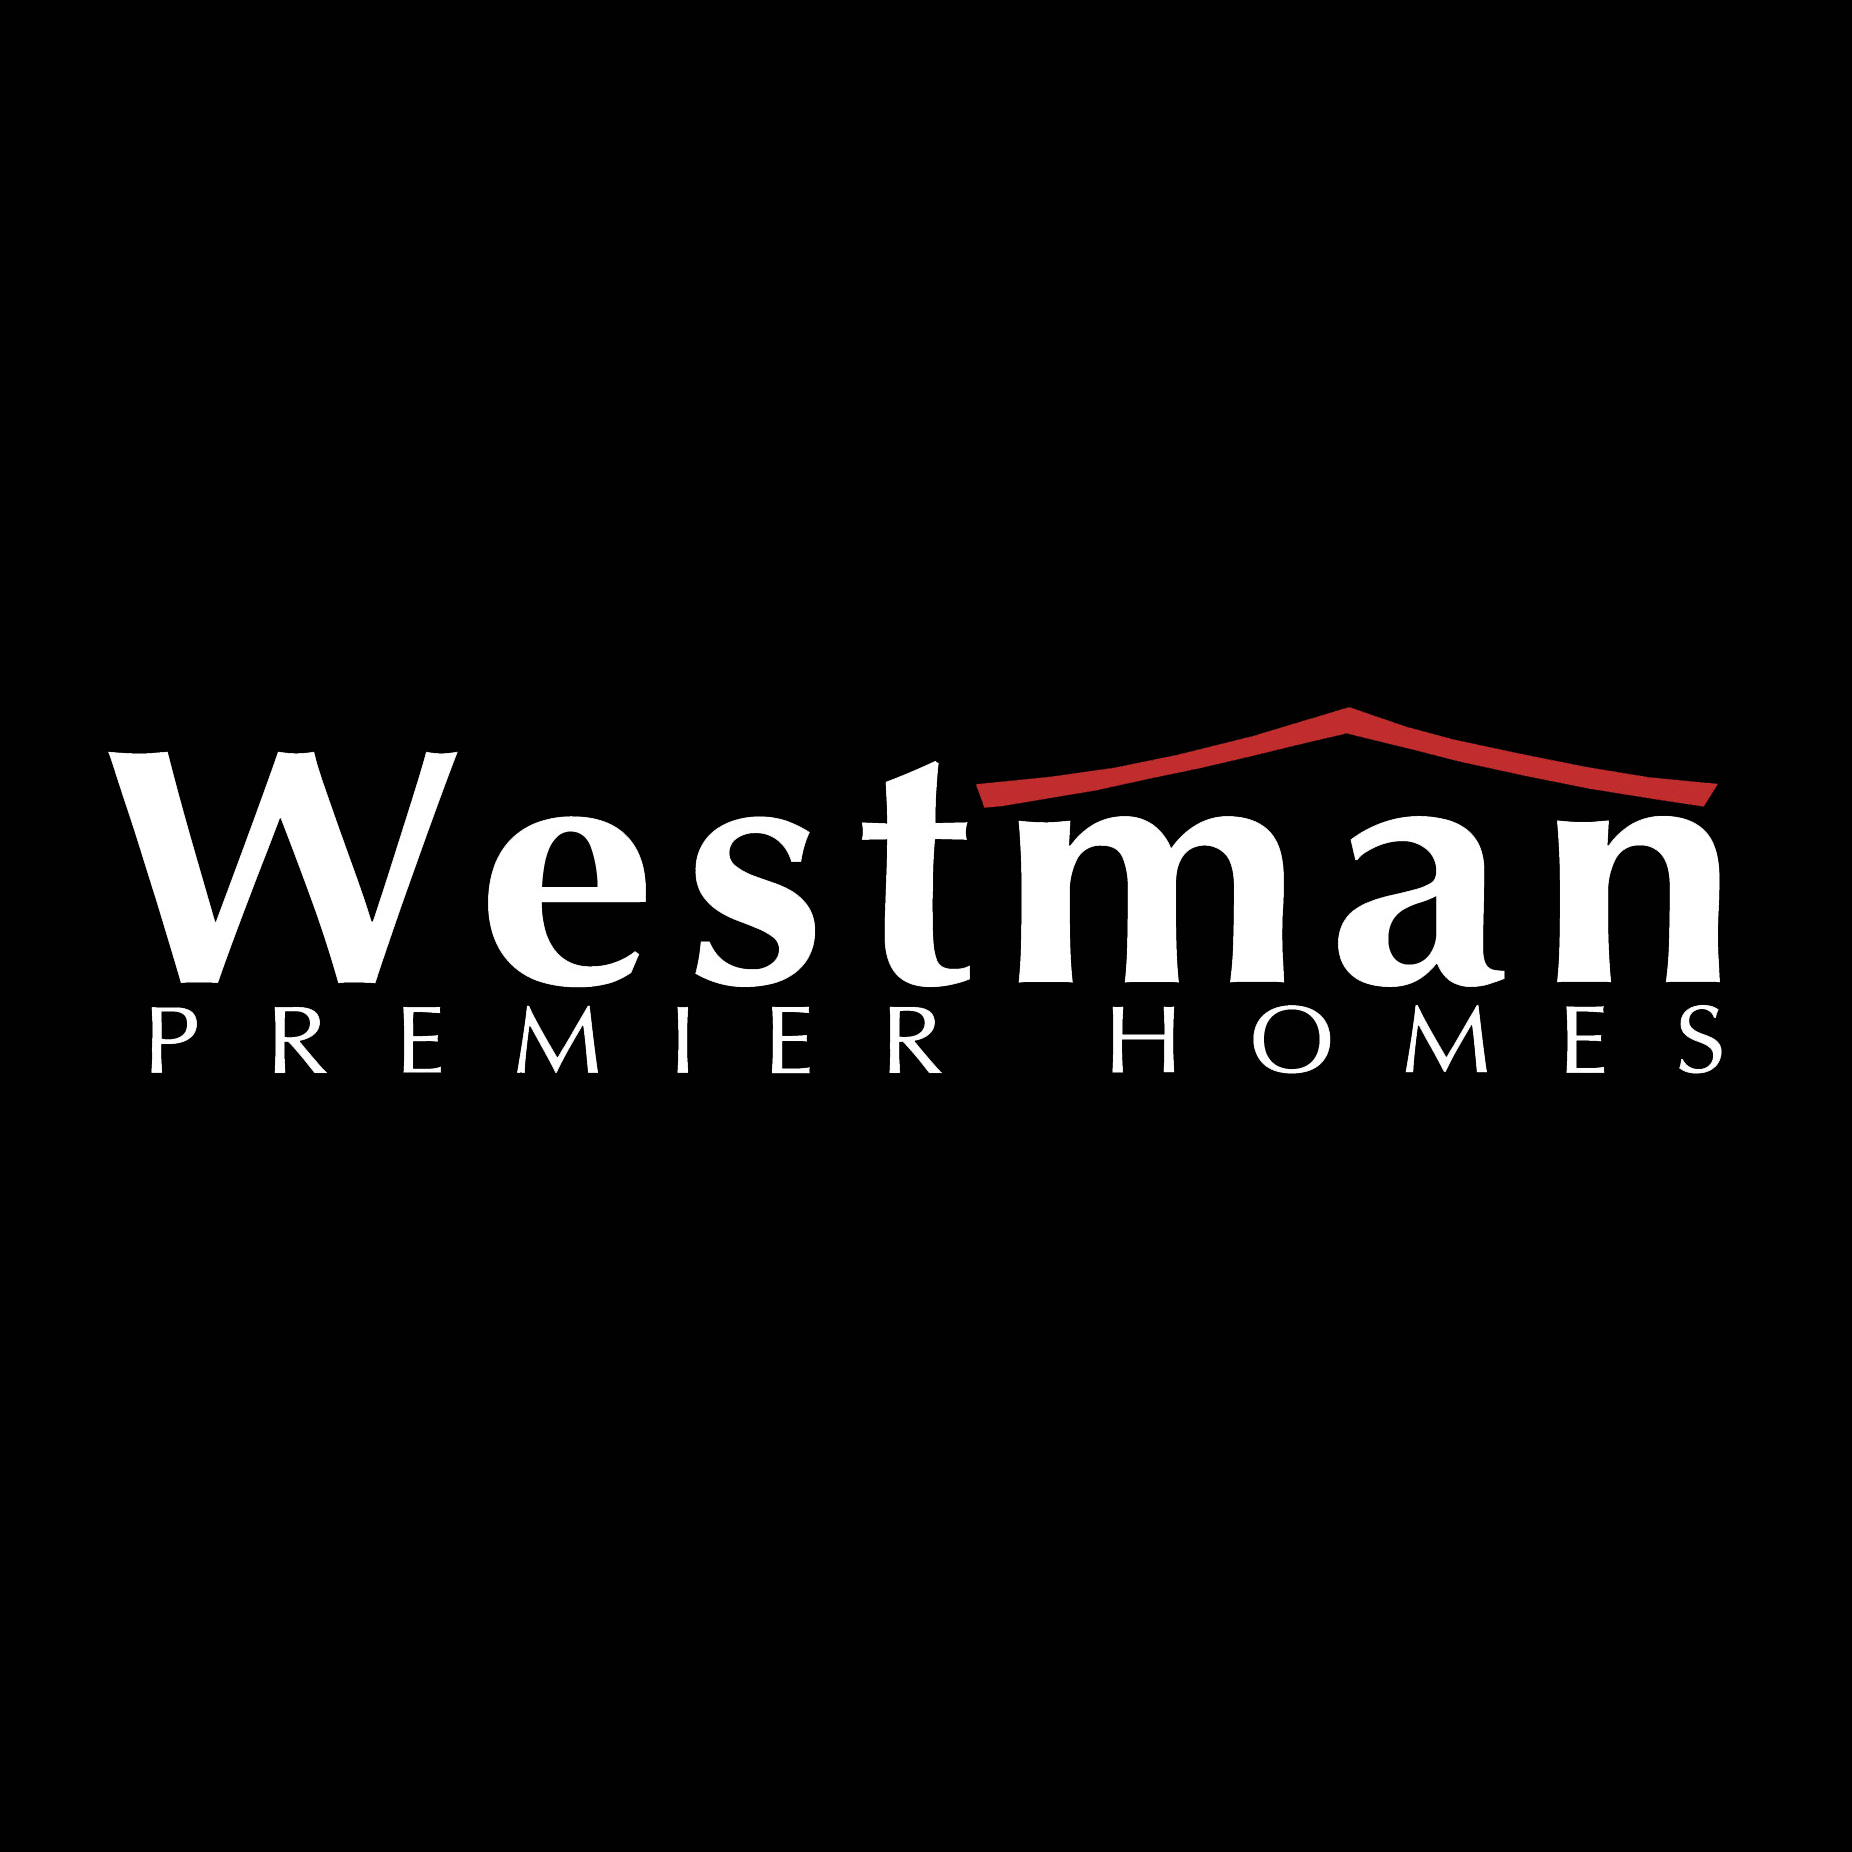 westman premier homes logo square on black